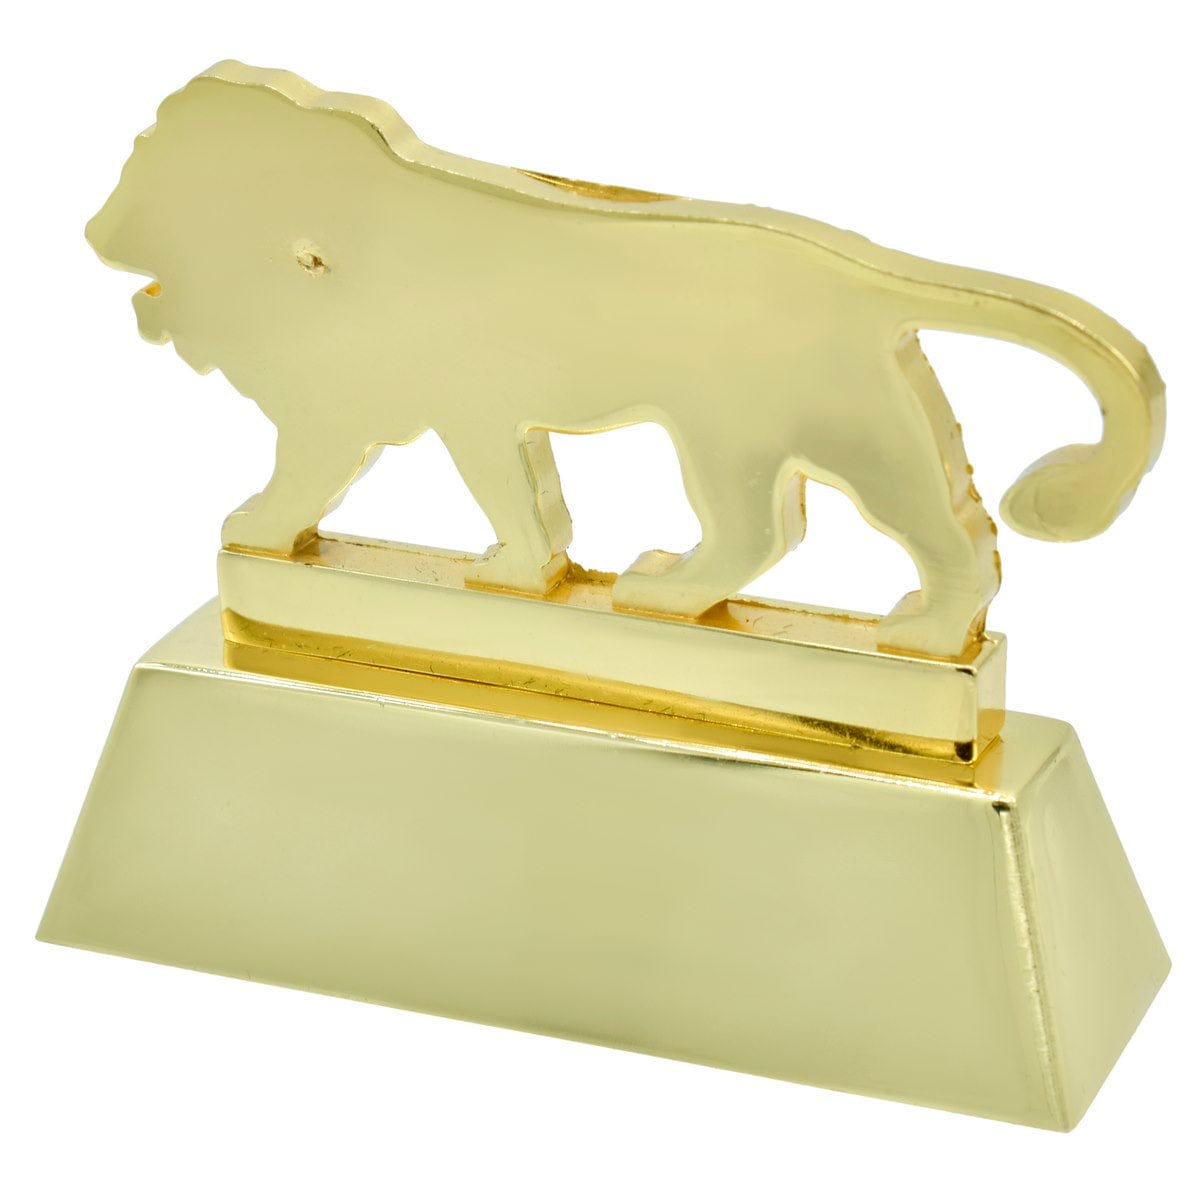 jags-mumbai Paper Weight Paper Weight Gold